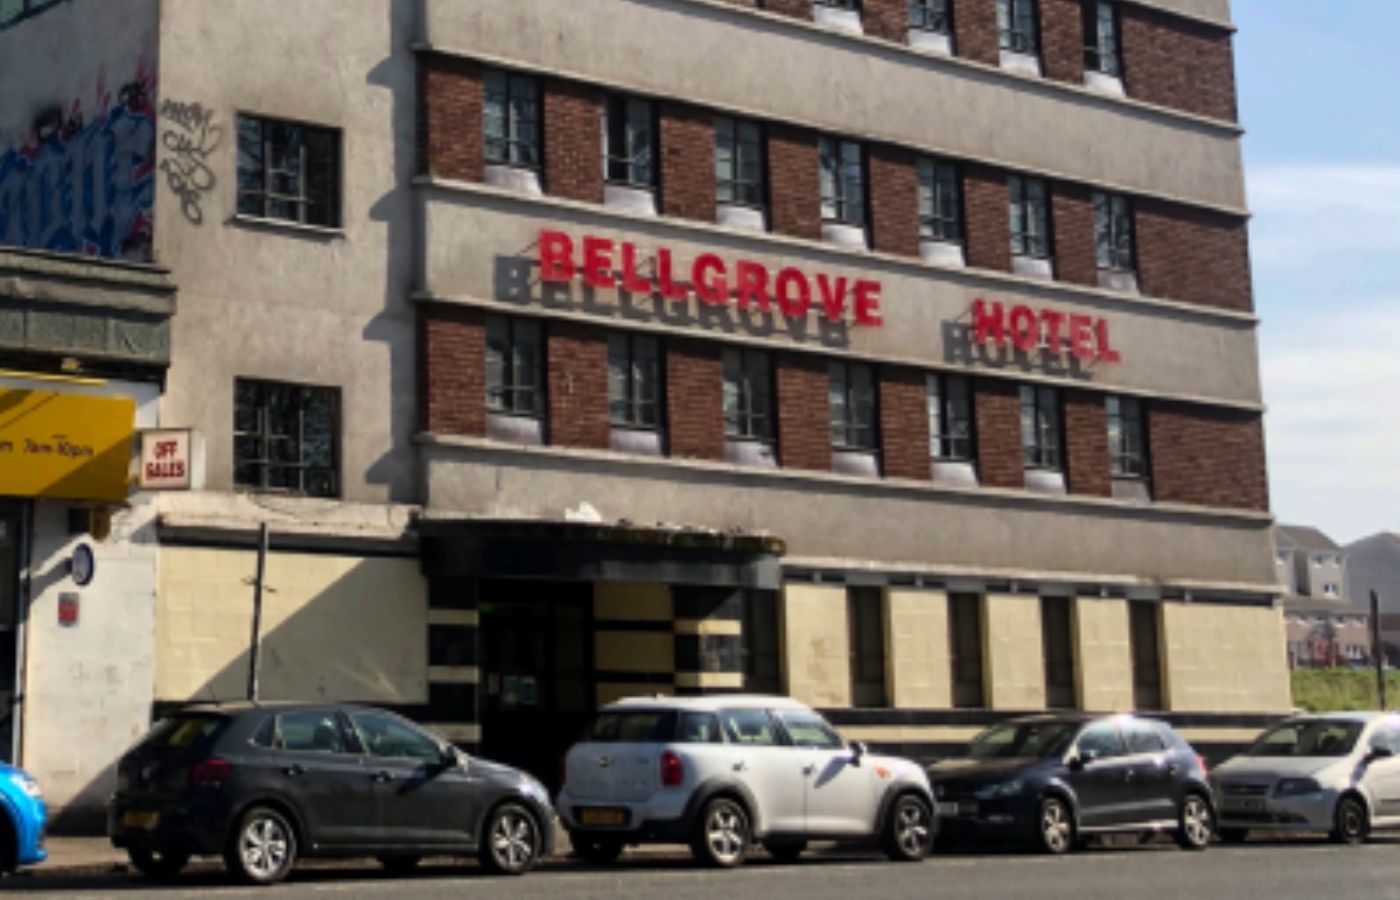 Bellgrove Hotel